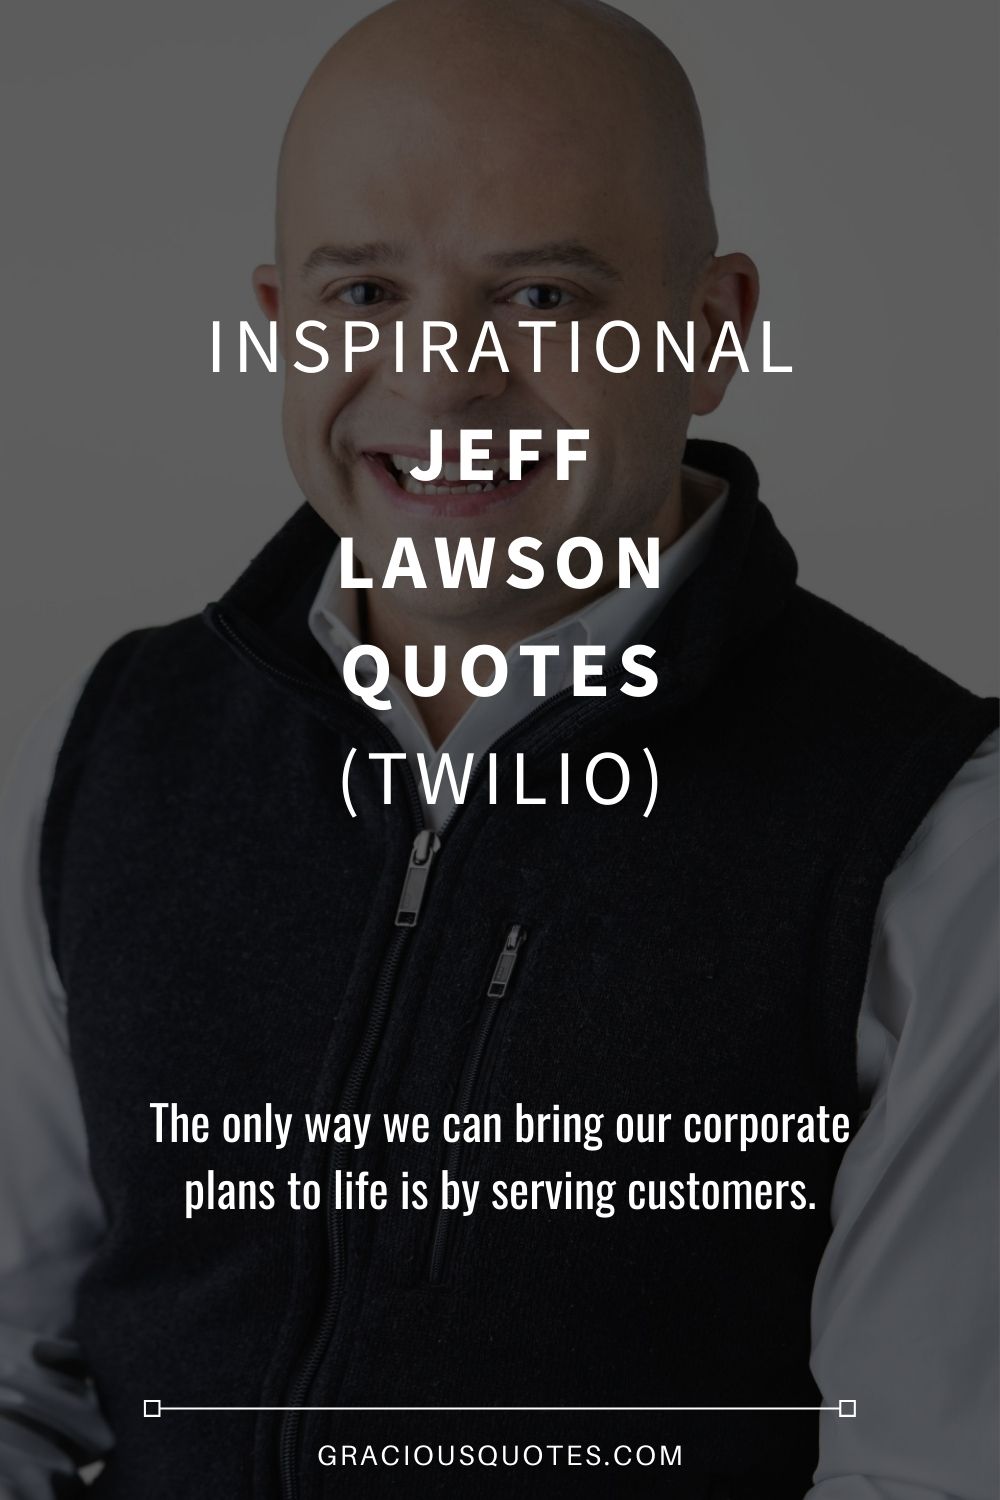 Inspirational Jeff Lawson Quotes (TWILIO) - Gracious Quotes